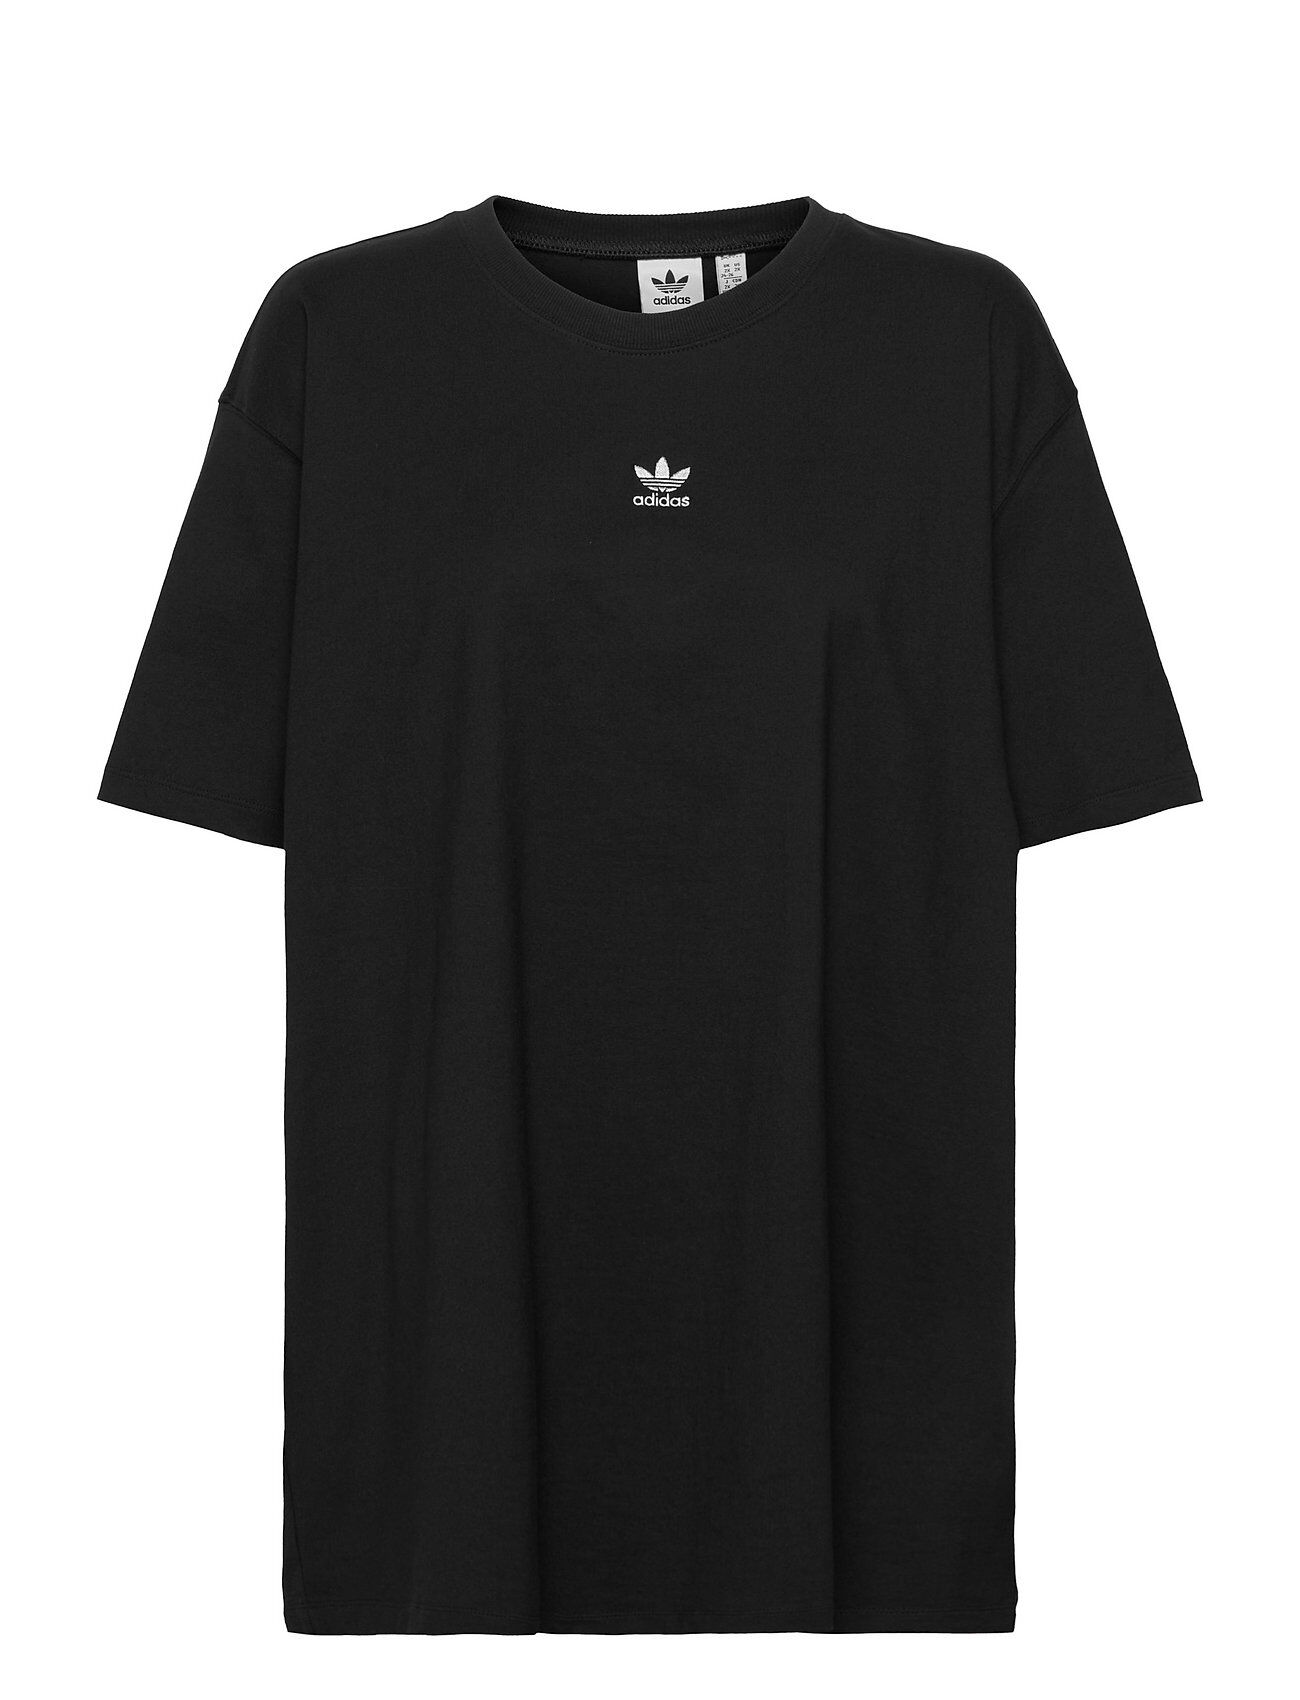 adidas Originals Tee W T-shirts & Tops Short-sleeved Svart Adidas Originals